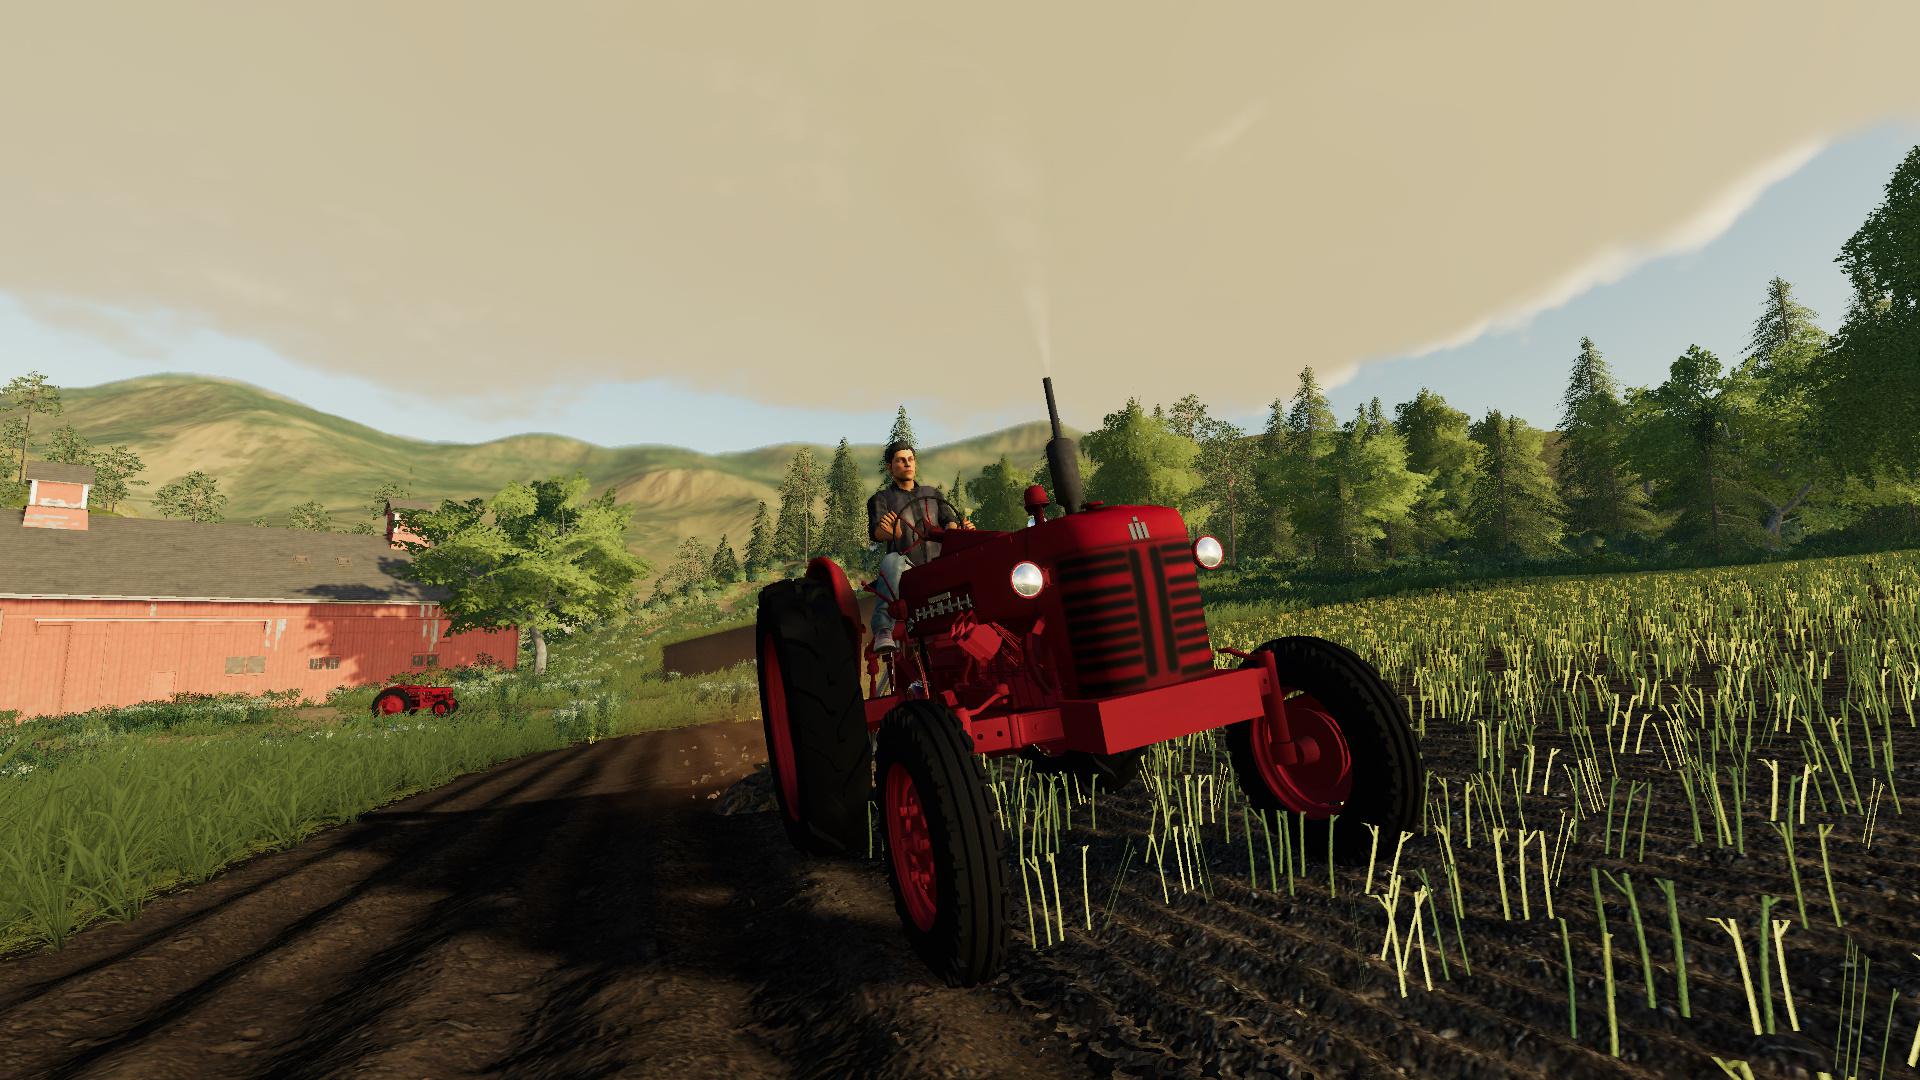 farming simulator 19 tractors list